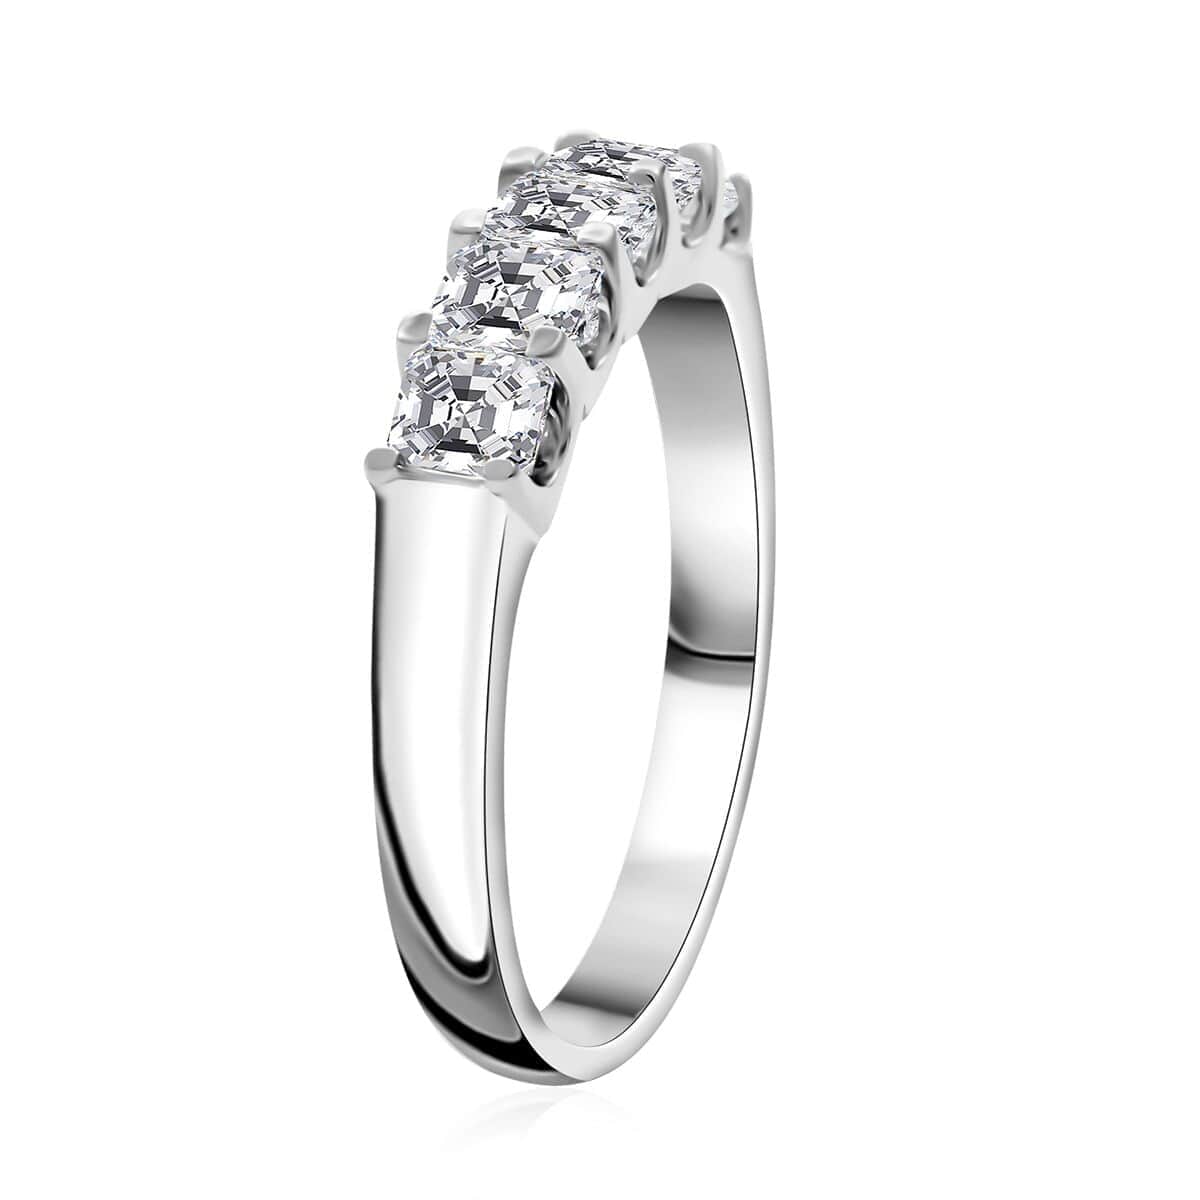 Modani 950 Platinum White Diamond (SI1) Ring 4.75 Grams 1.17 ctw image number 3